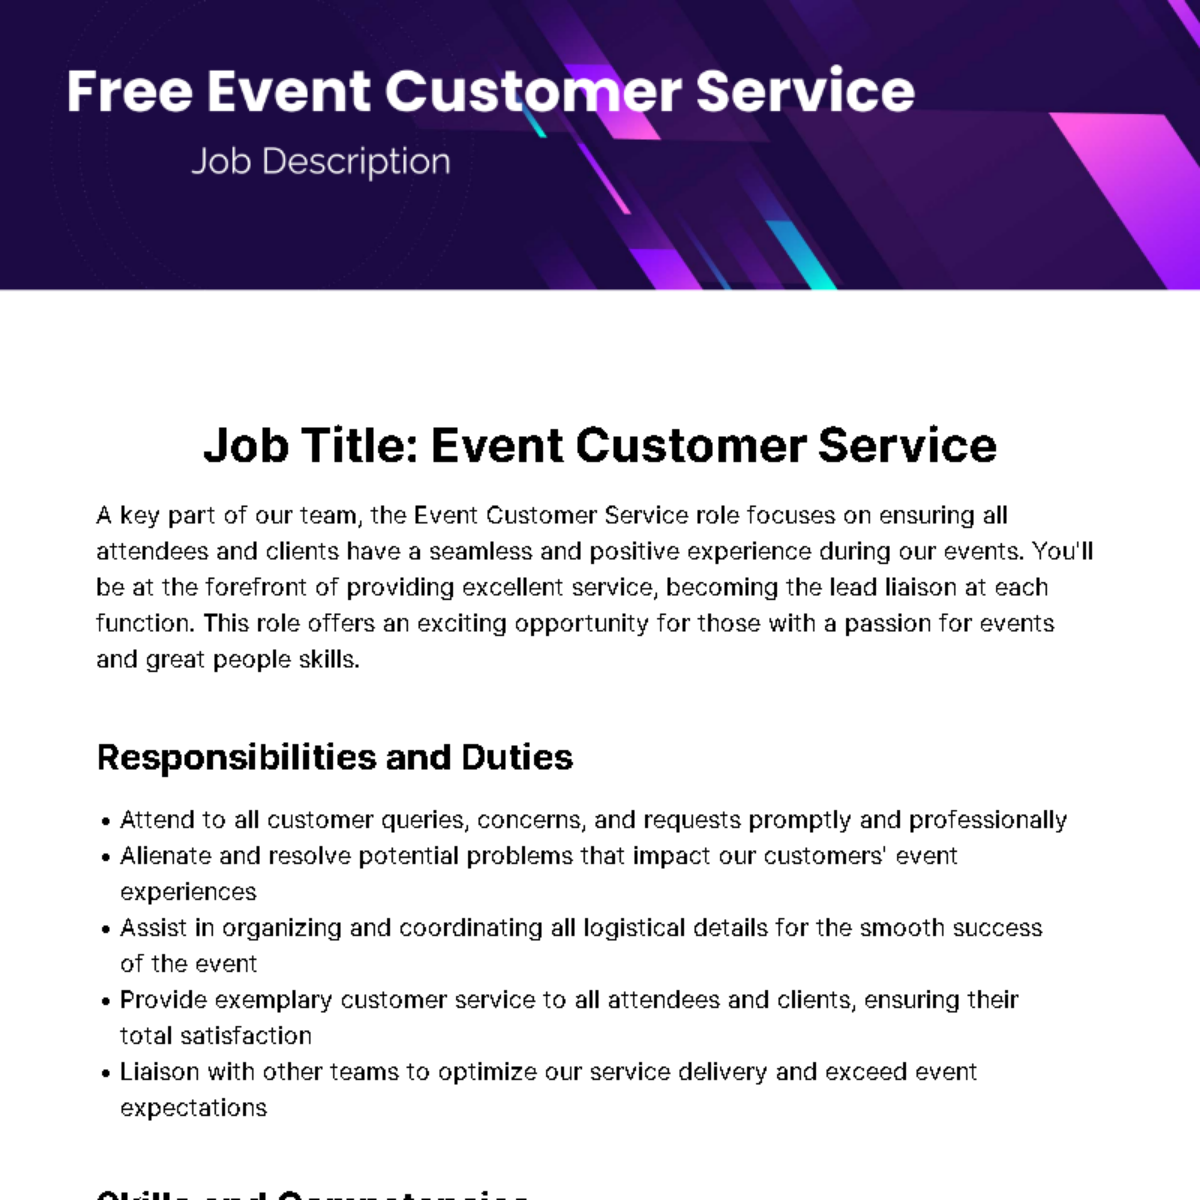 Free Event Customer Service Job Description Template